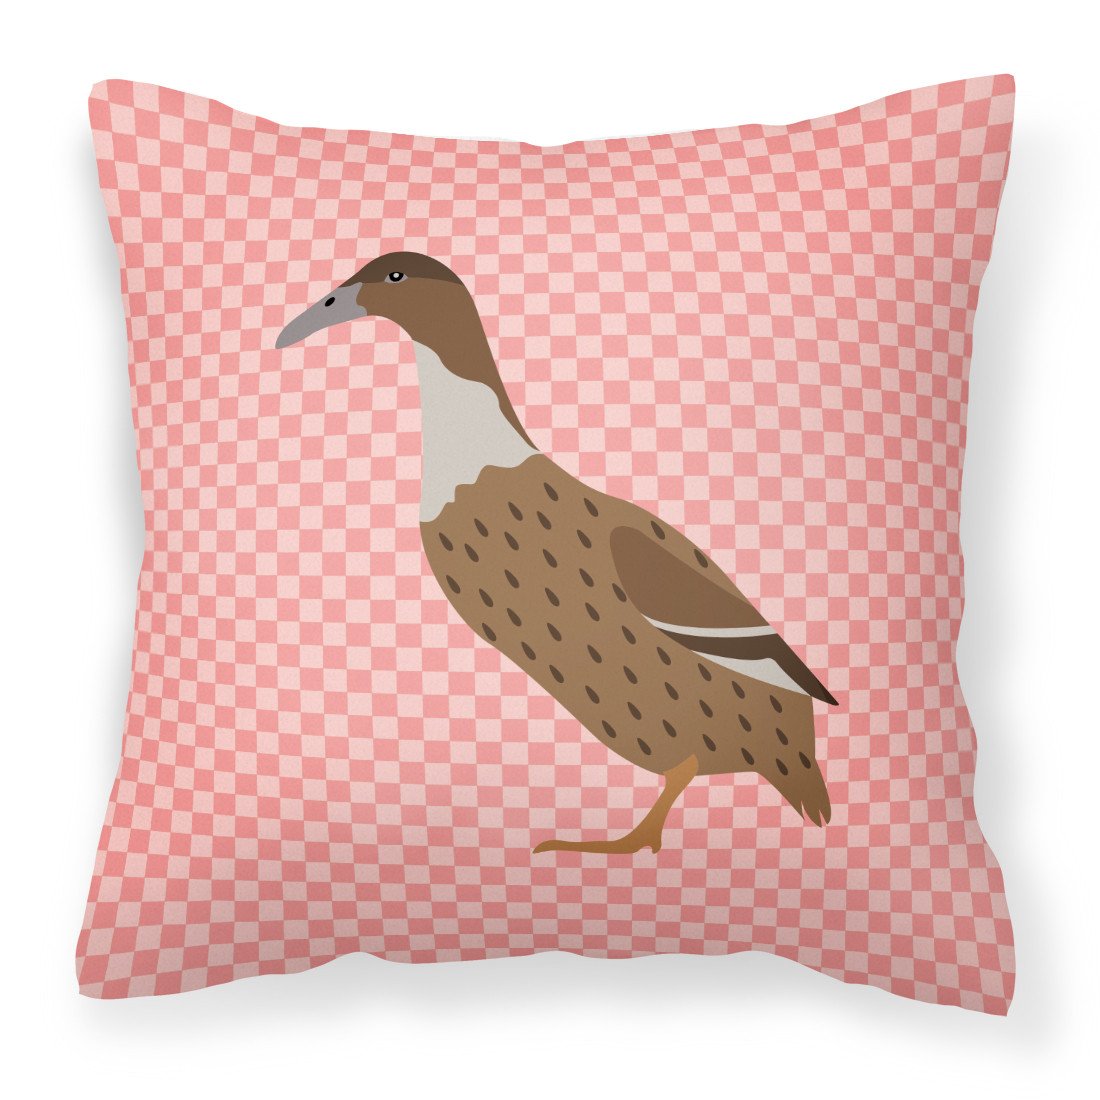 Dutch Hook Bill Duck Pink Check Fabric Decorative Pillow BB7861PW1818 by Caroline's Treasures